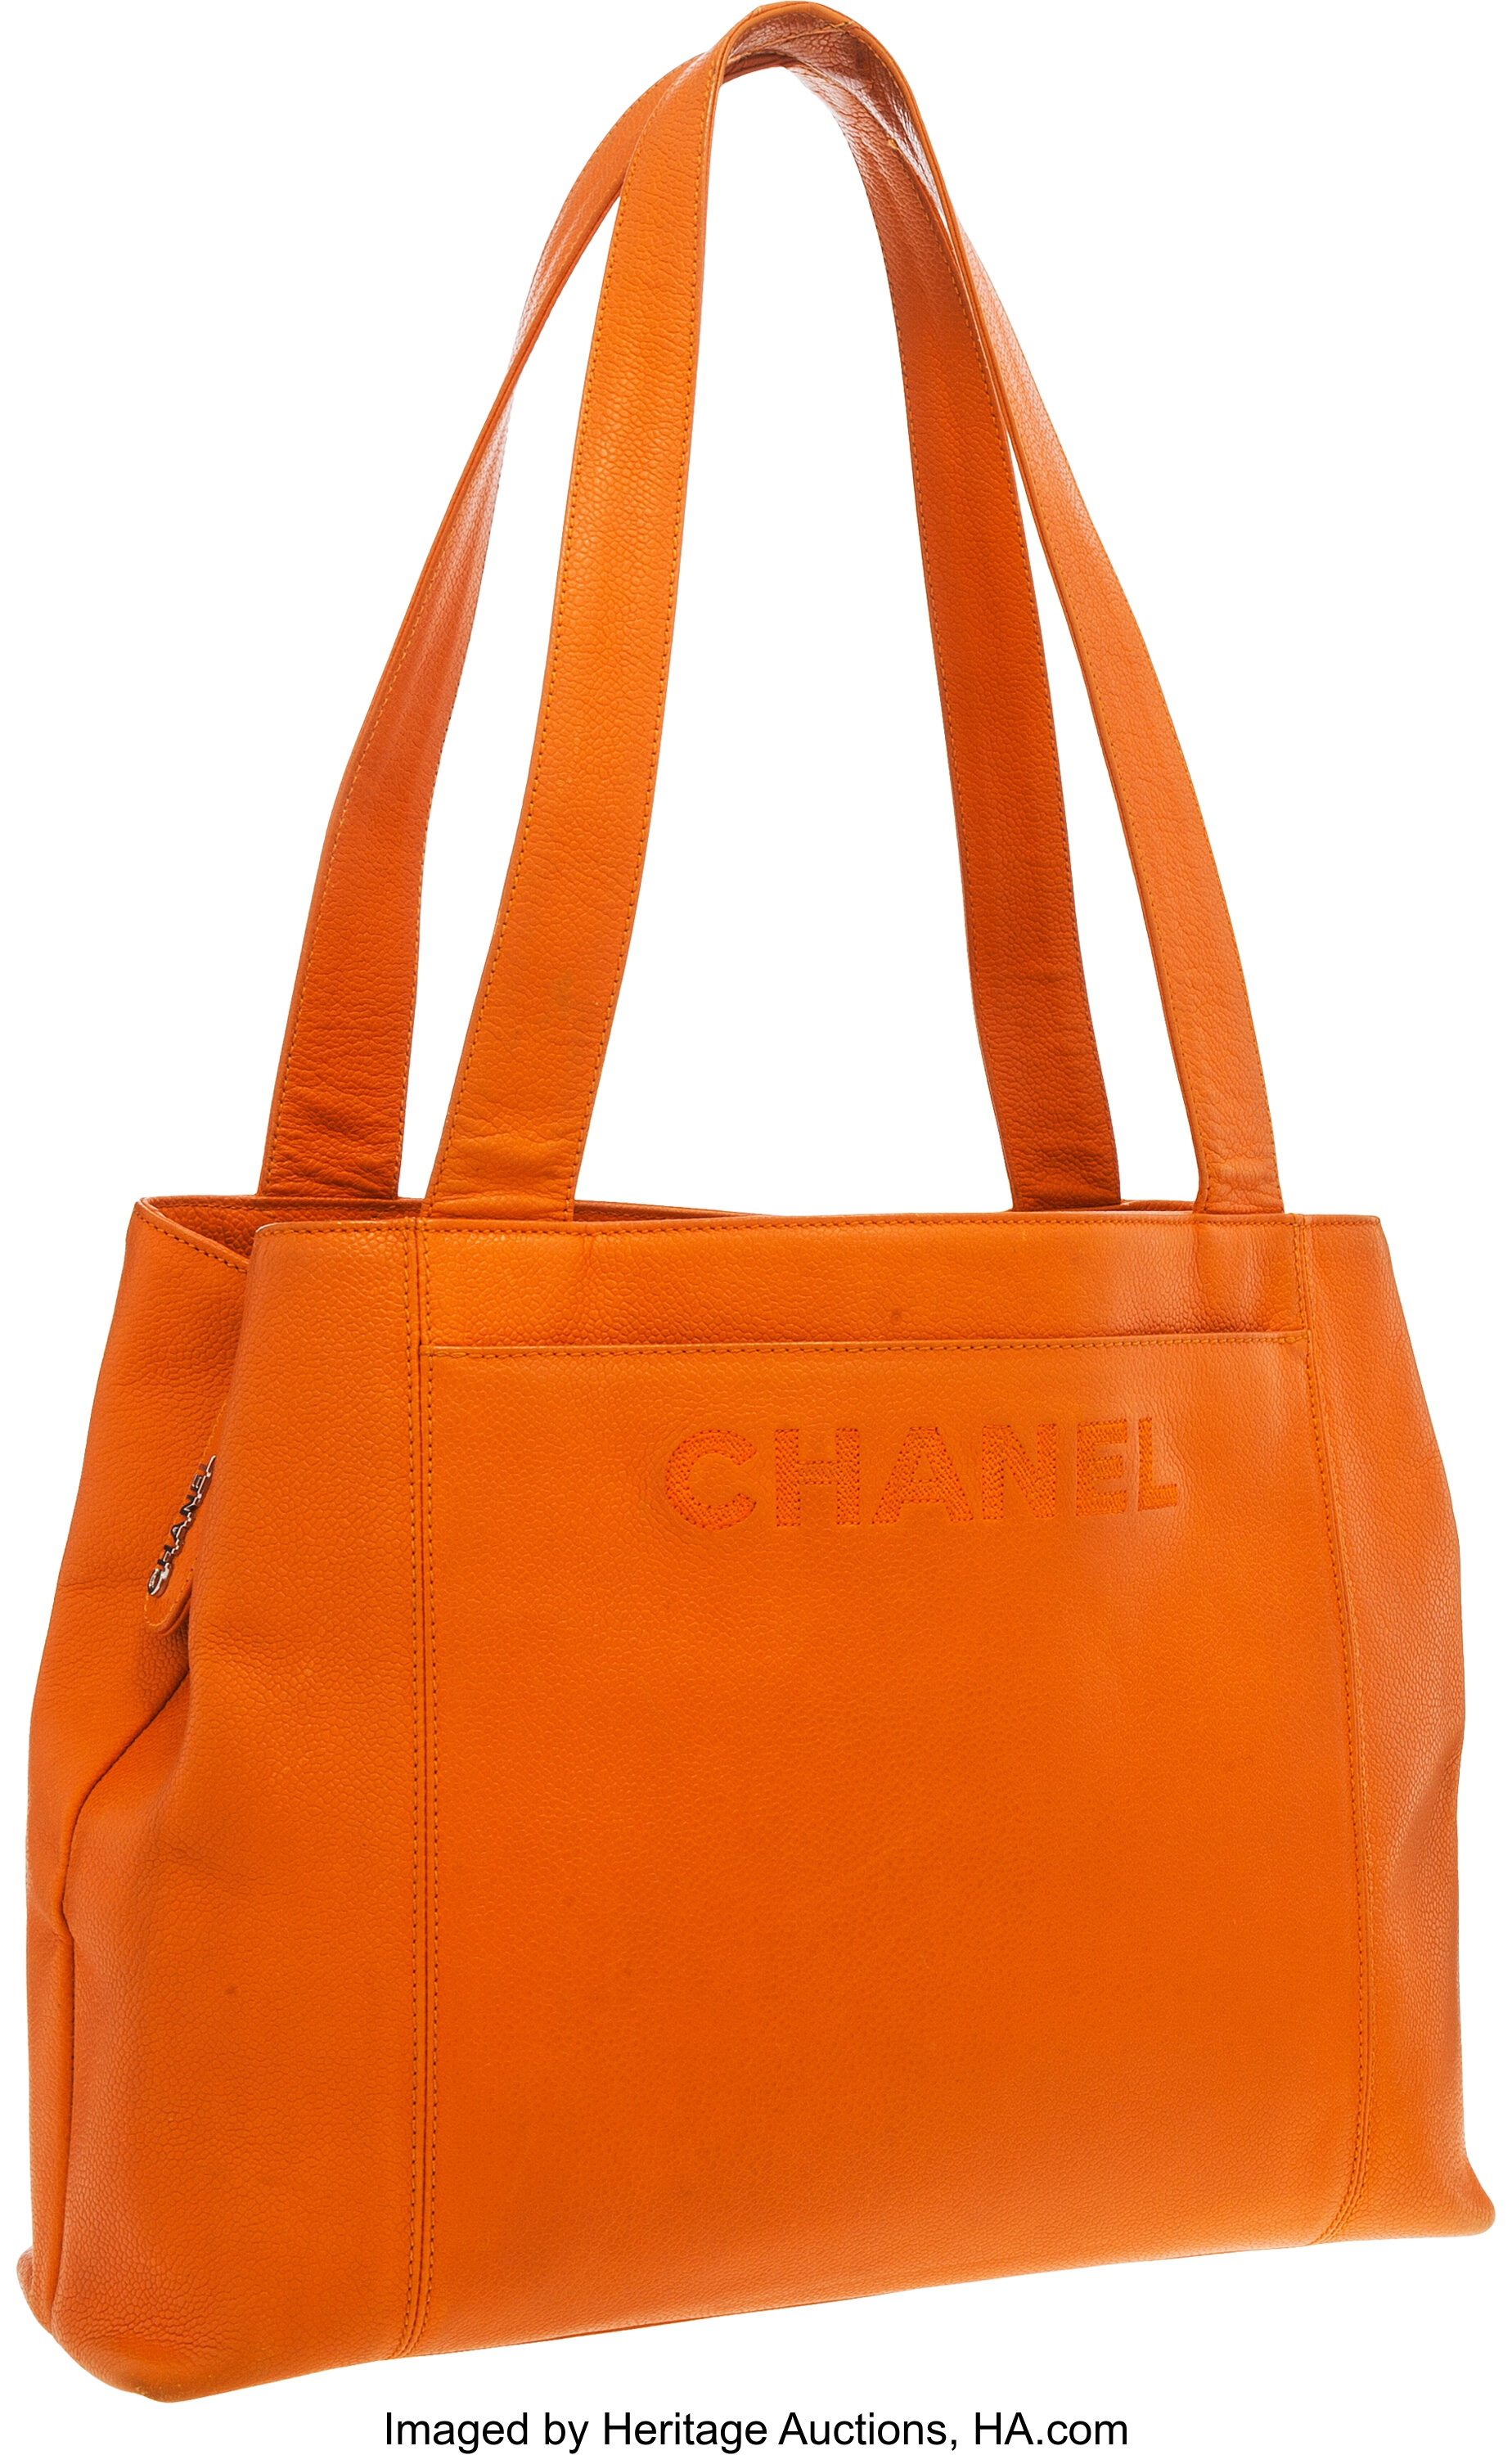 Chanel Orange Caviar Leather Tote Bag . Very Good Condition . 13